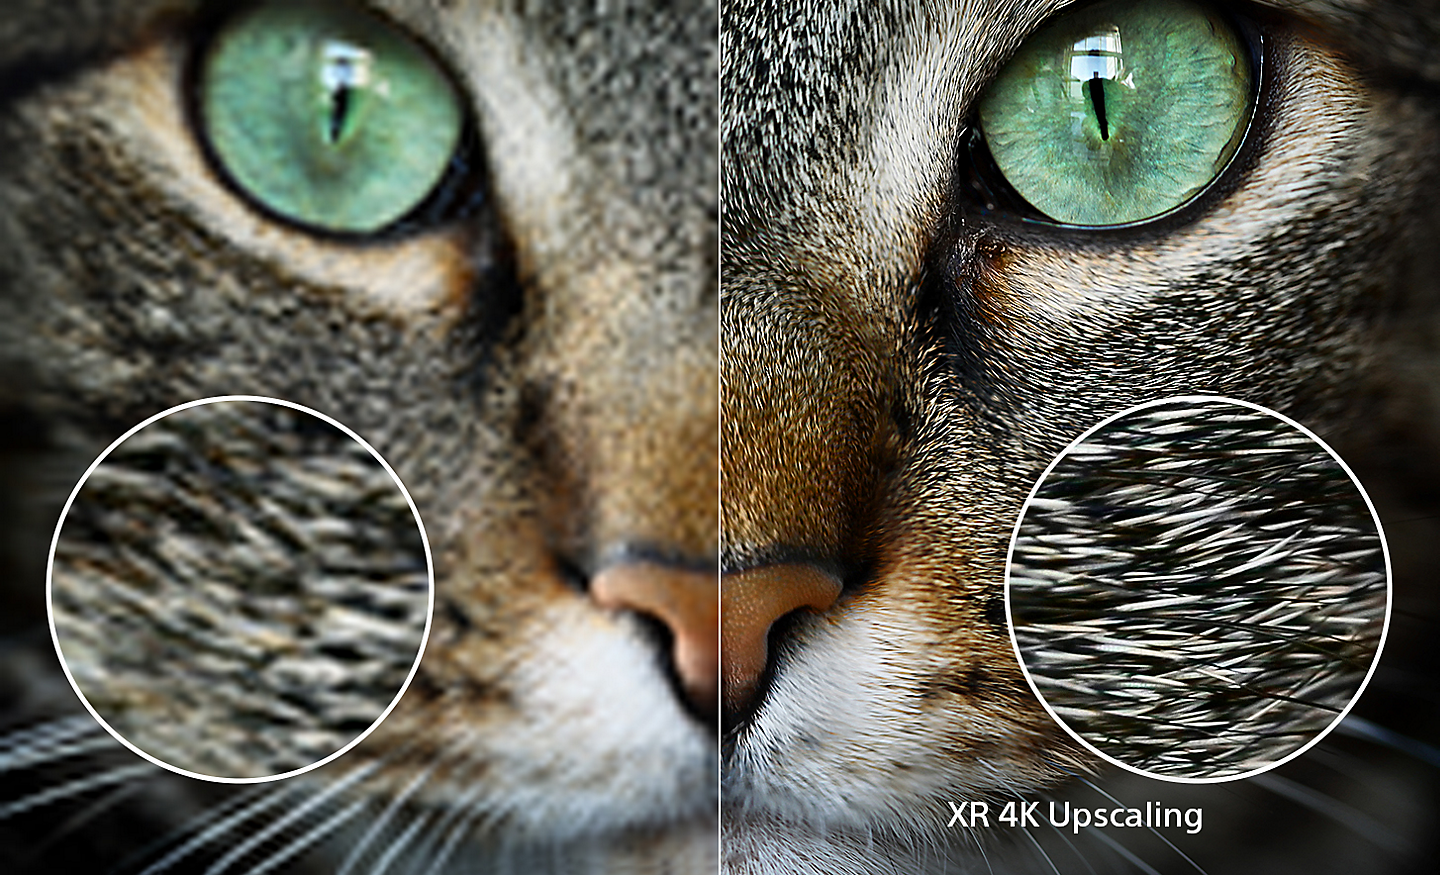 Podijeljeni zaslon s glavom mačke na desnoj strani prikazuje dodatne detalje nakon poboljšanja rezolucije na XR 4K